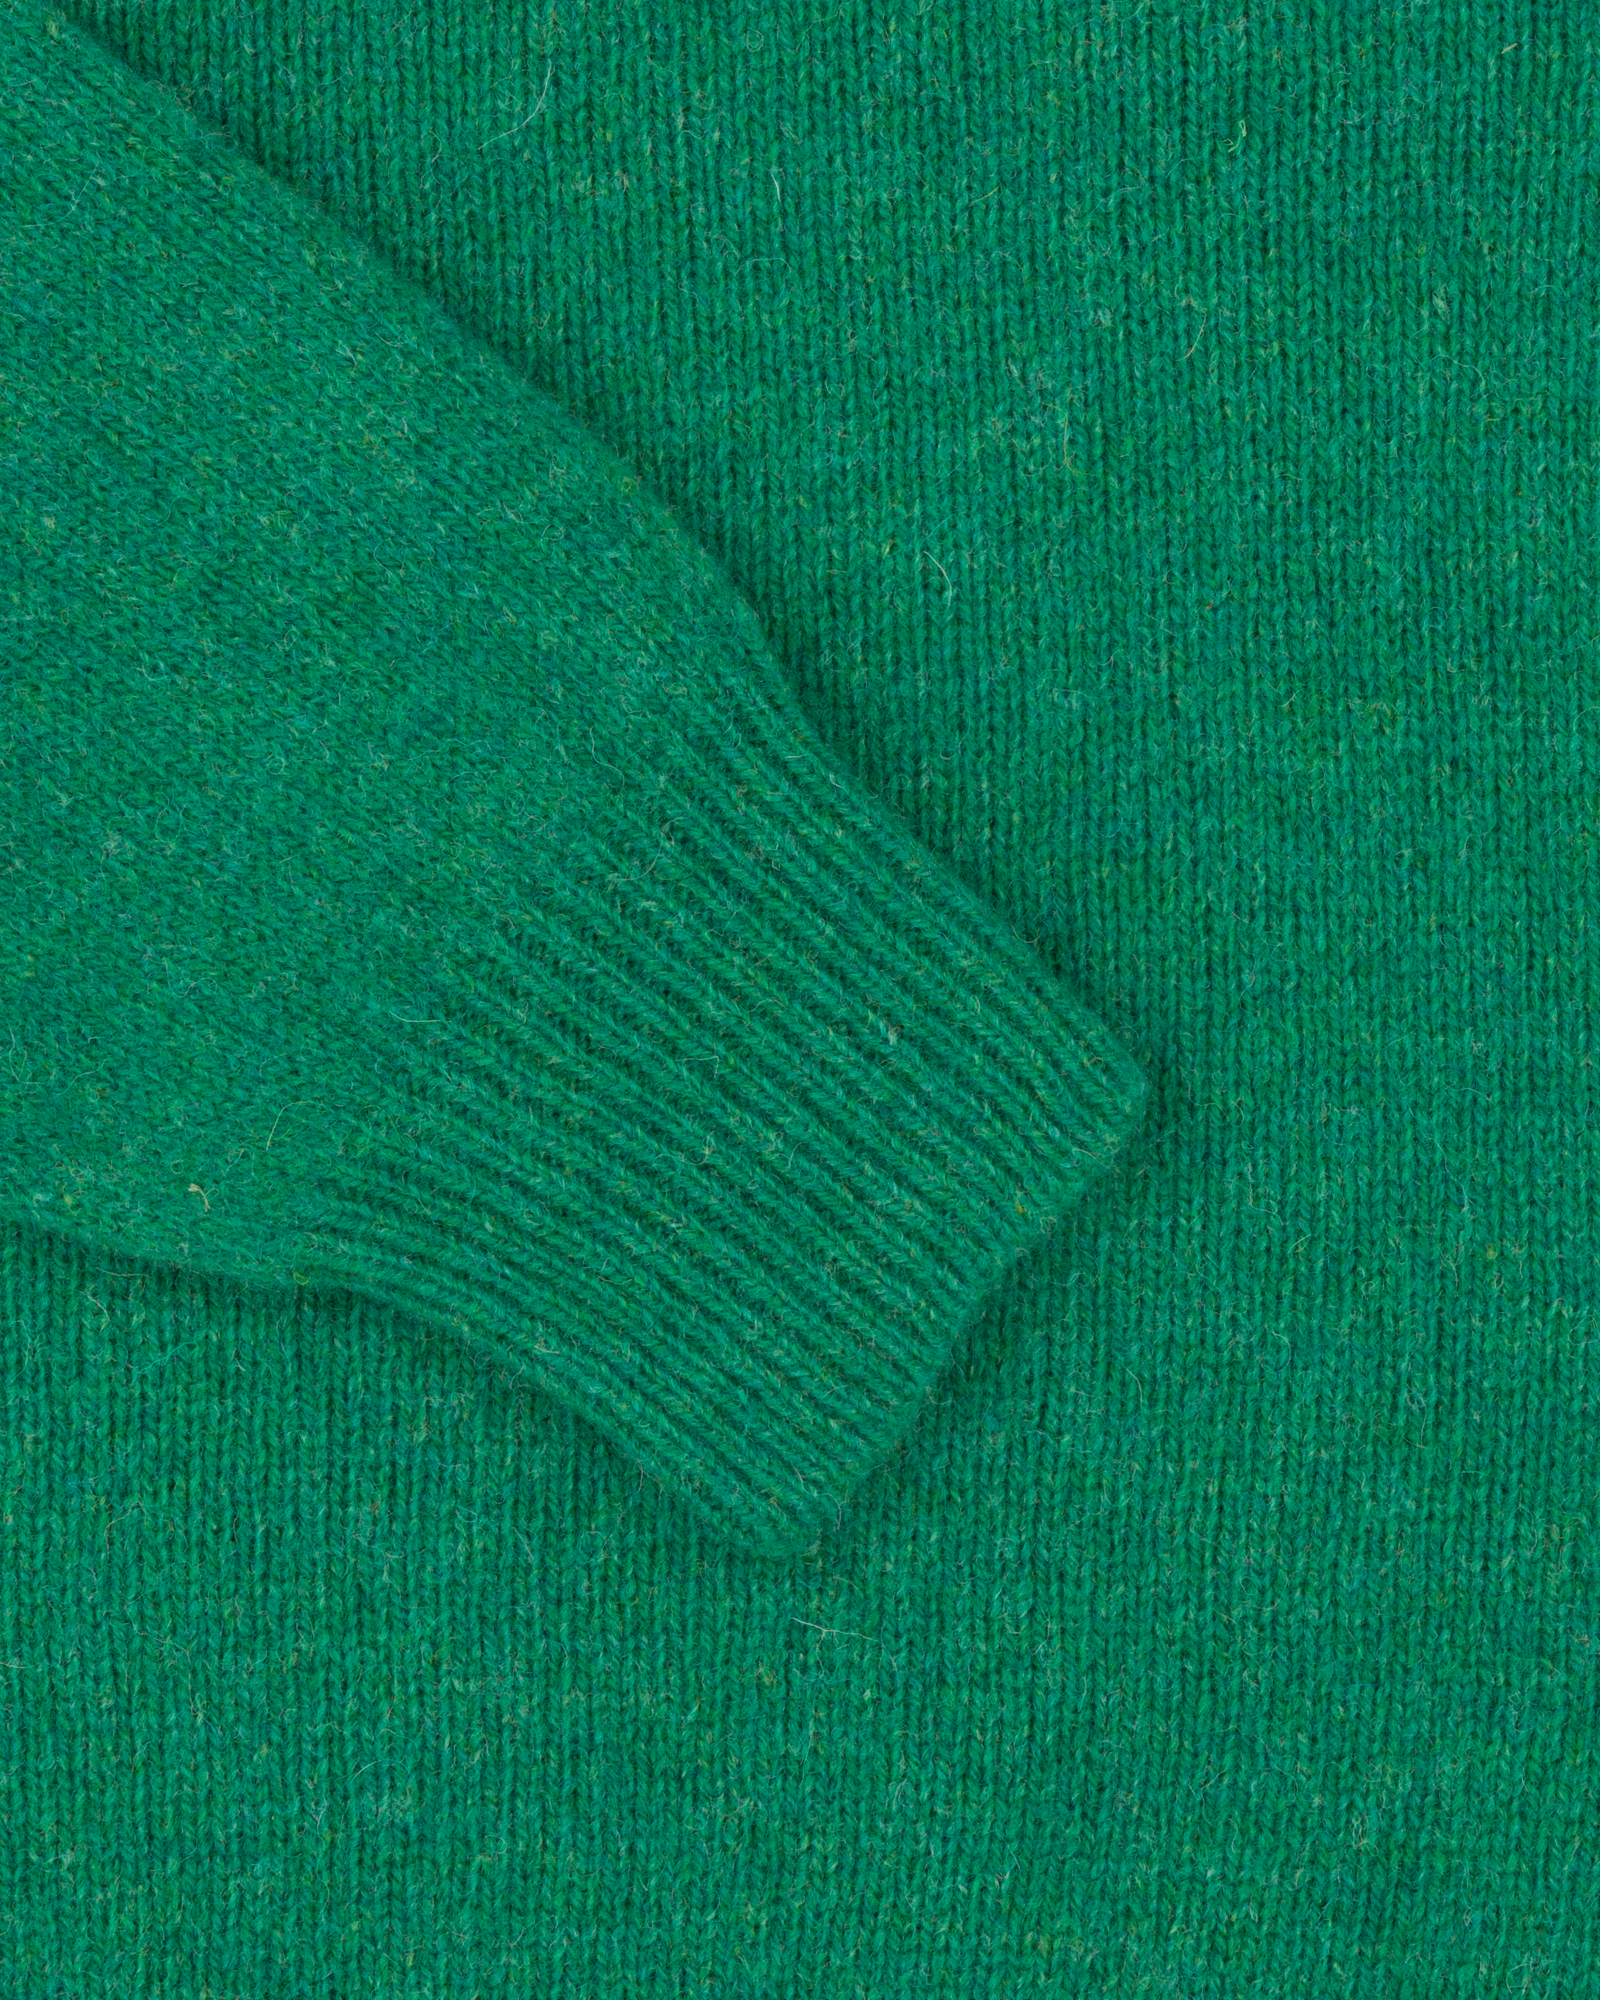 Shetland Wool Crew Neck Sweater - Green